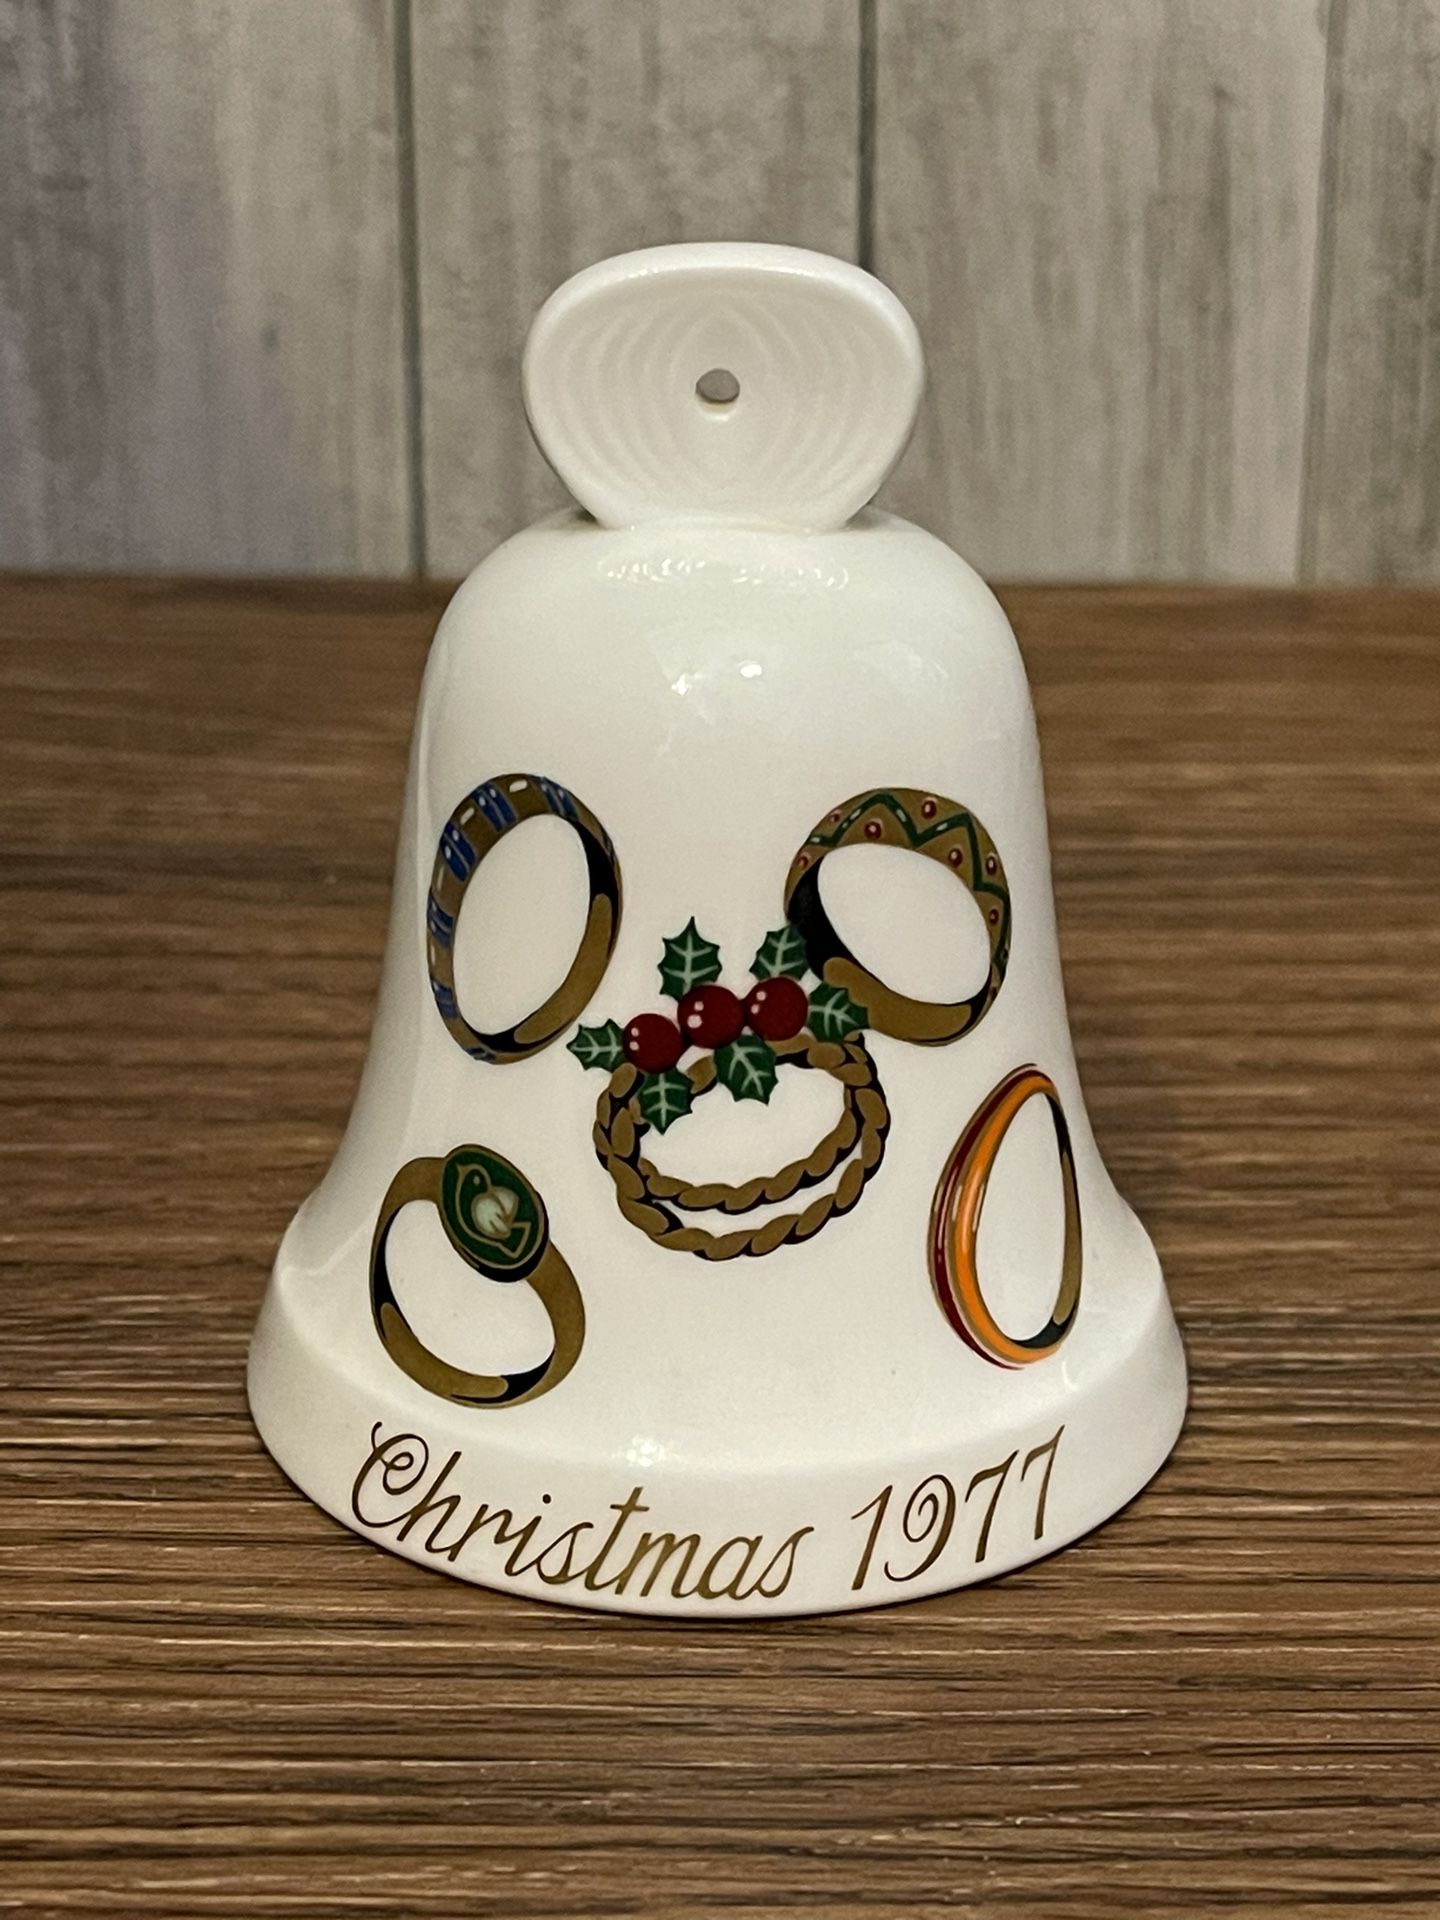 Christmas Bell by Noritake - 1977 - 5 Golden Rings